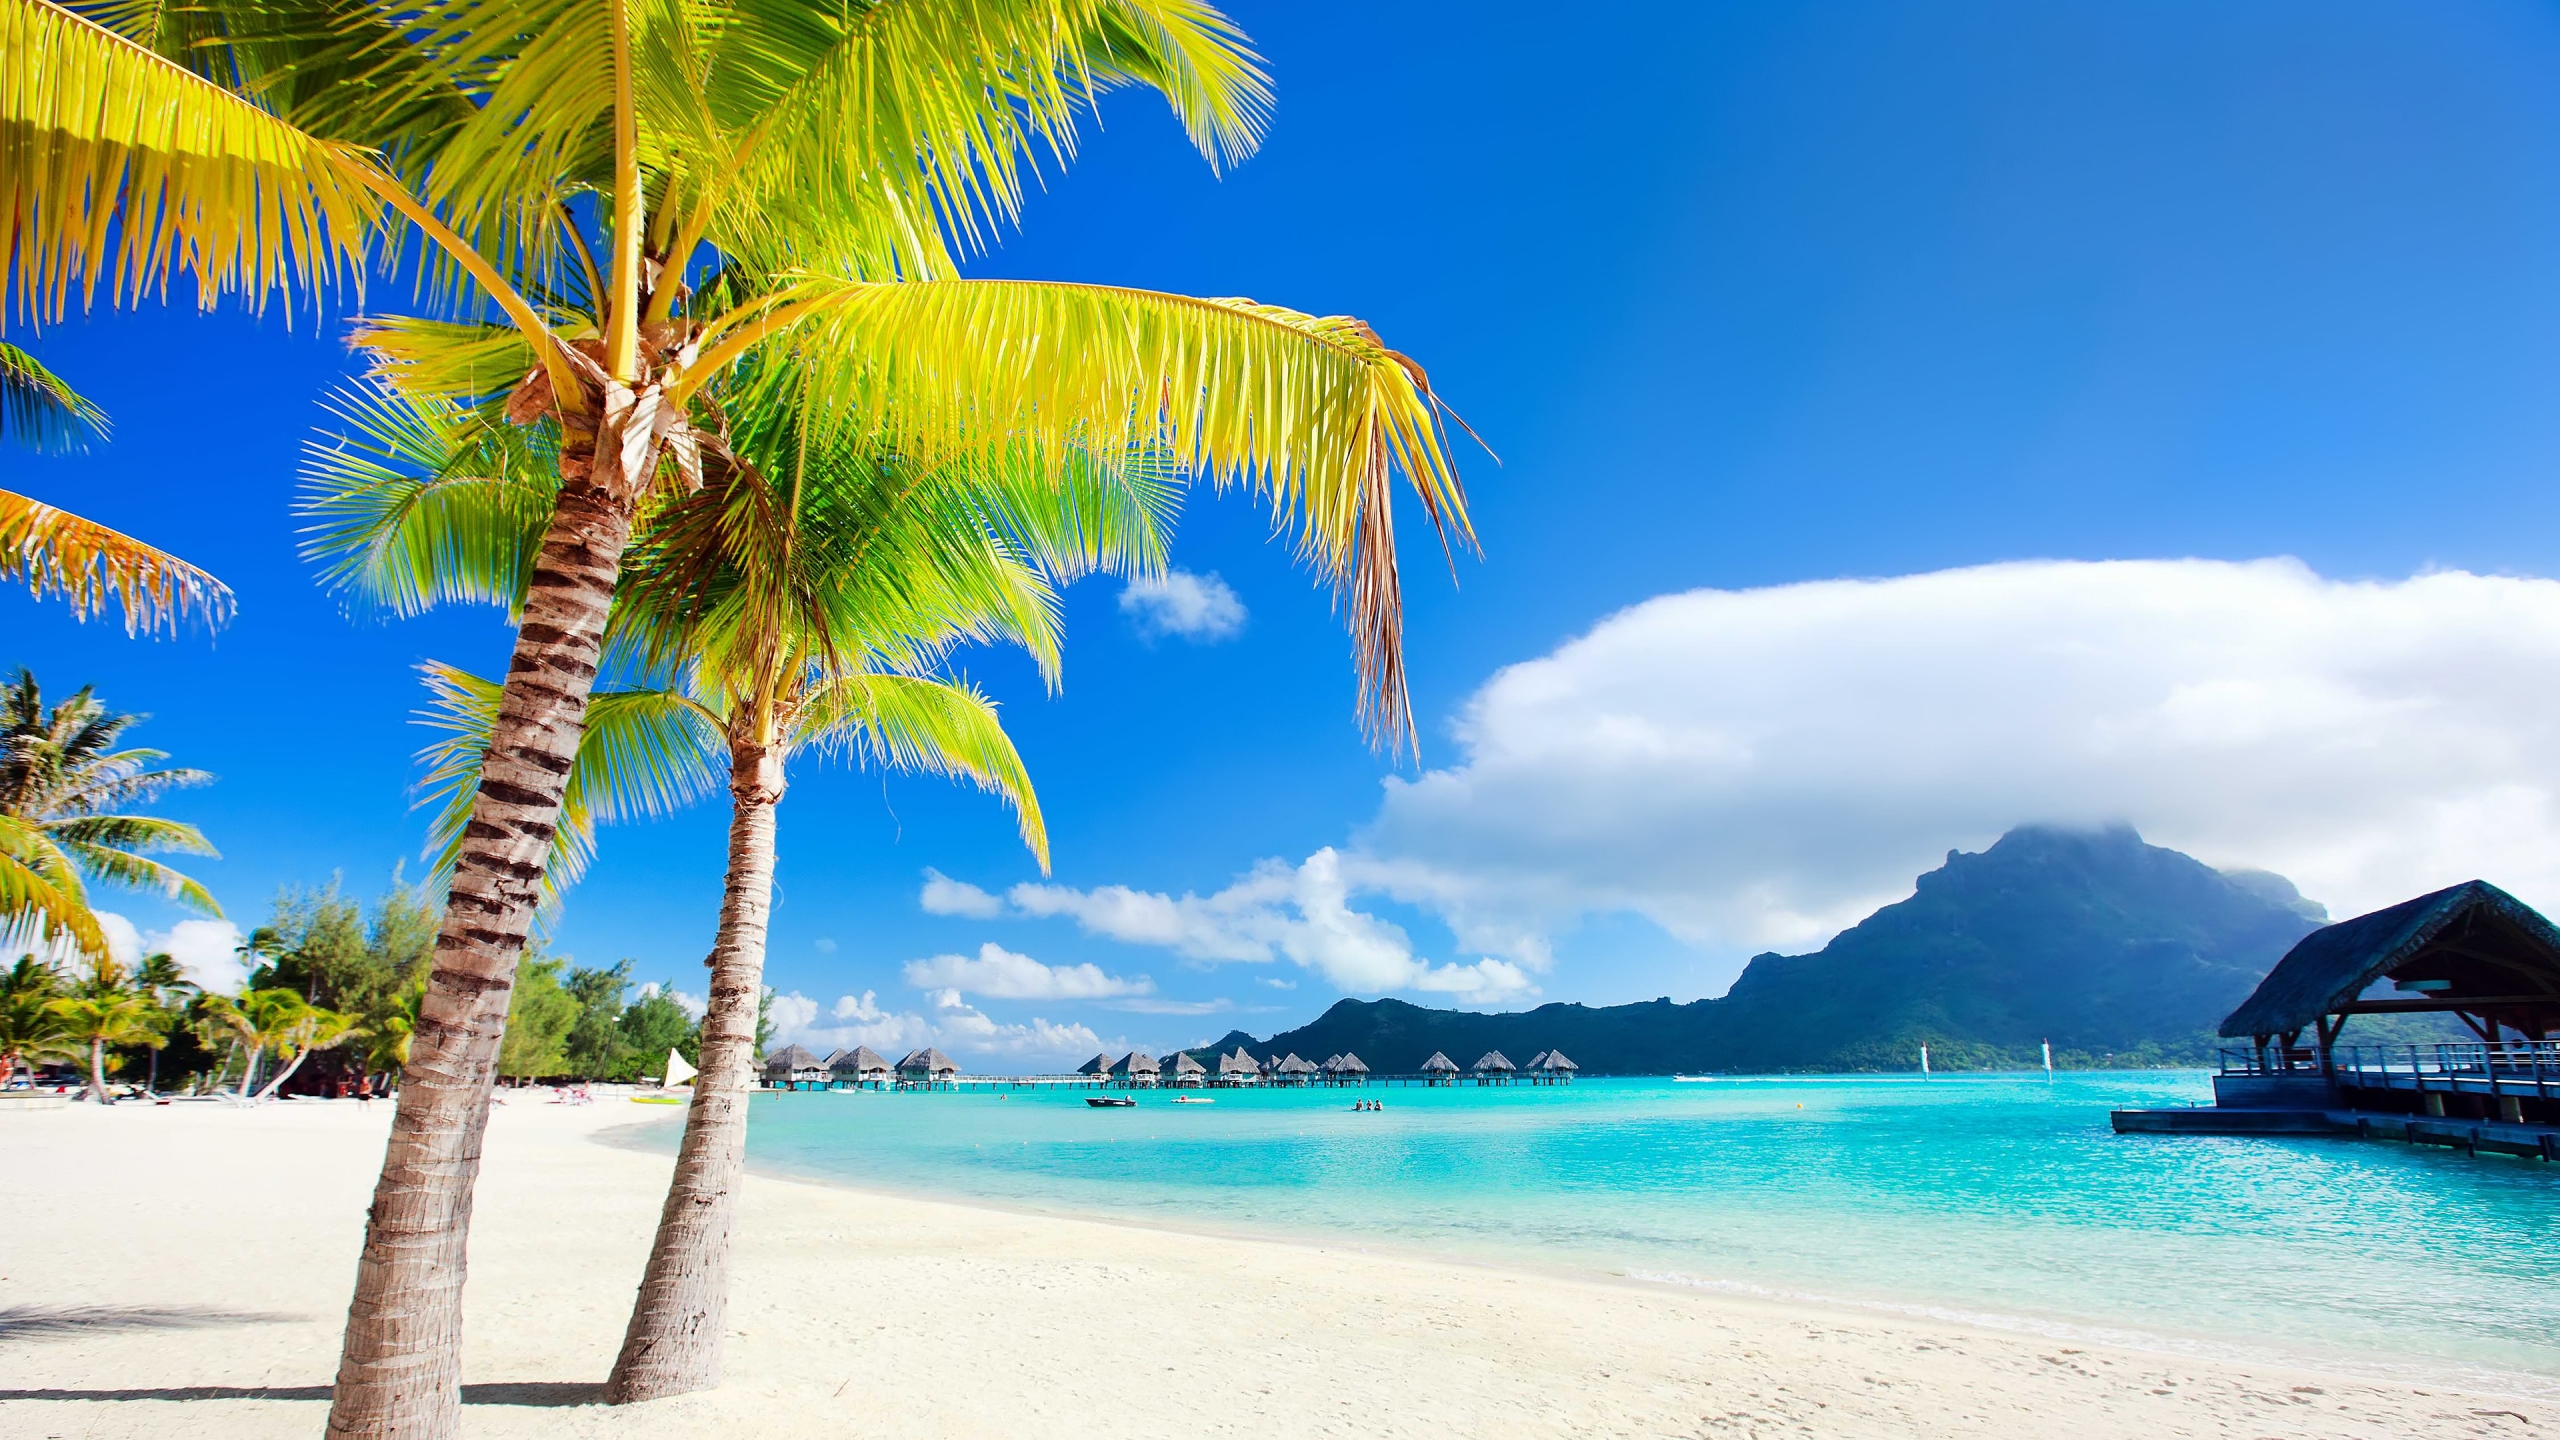 Bora Bora Beach for 2560x1440 HDTV resolution